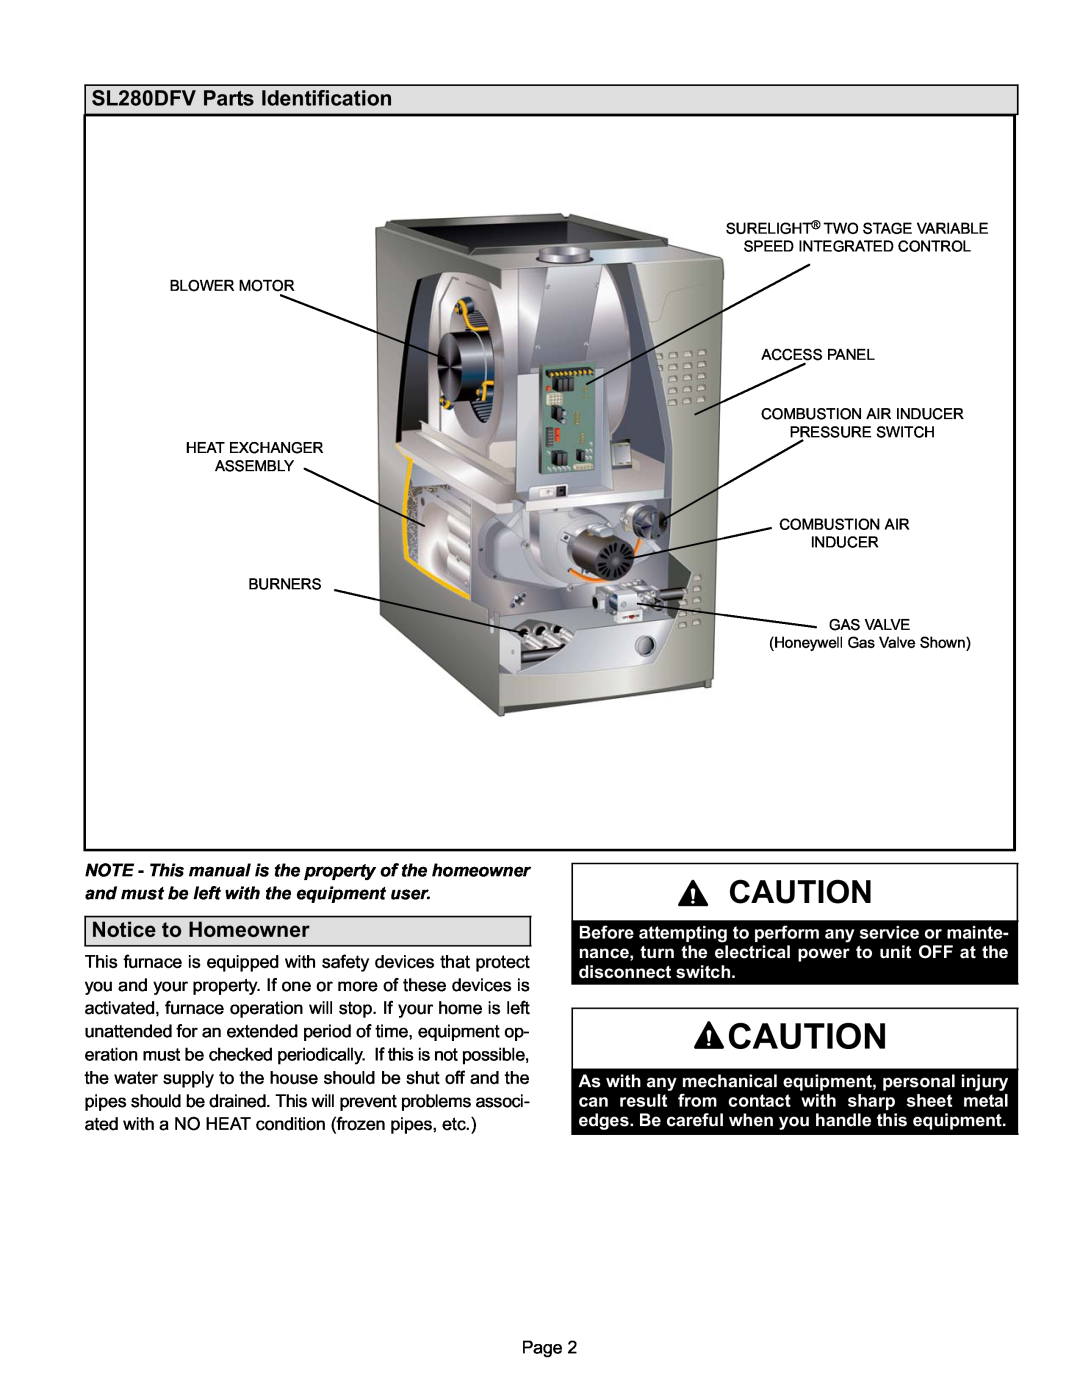 Lennox International Inc manual SL280DFV Parts Identification, Notice to Homeowner, Page 